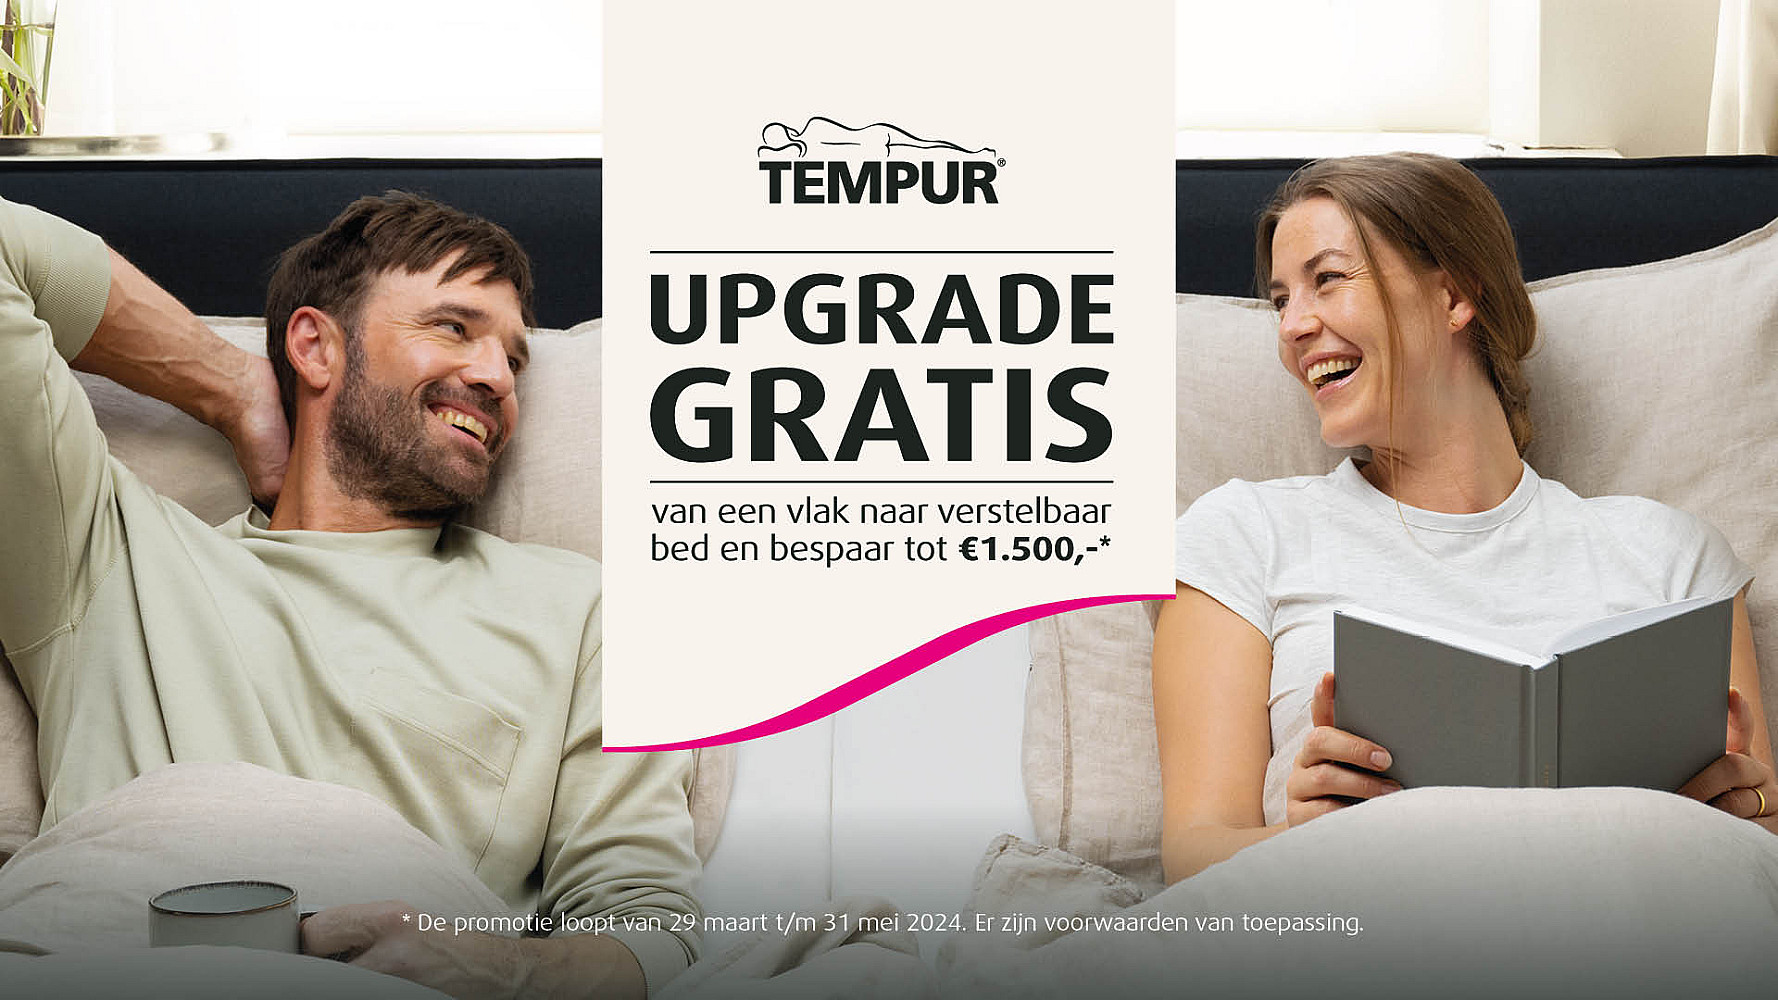 Tempur gratis upgrade afbeelding